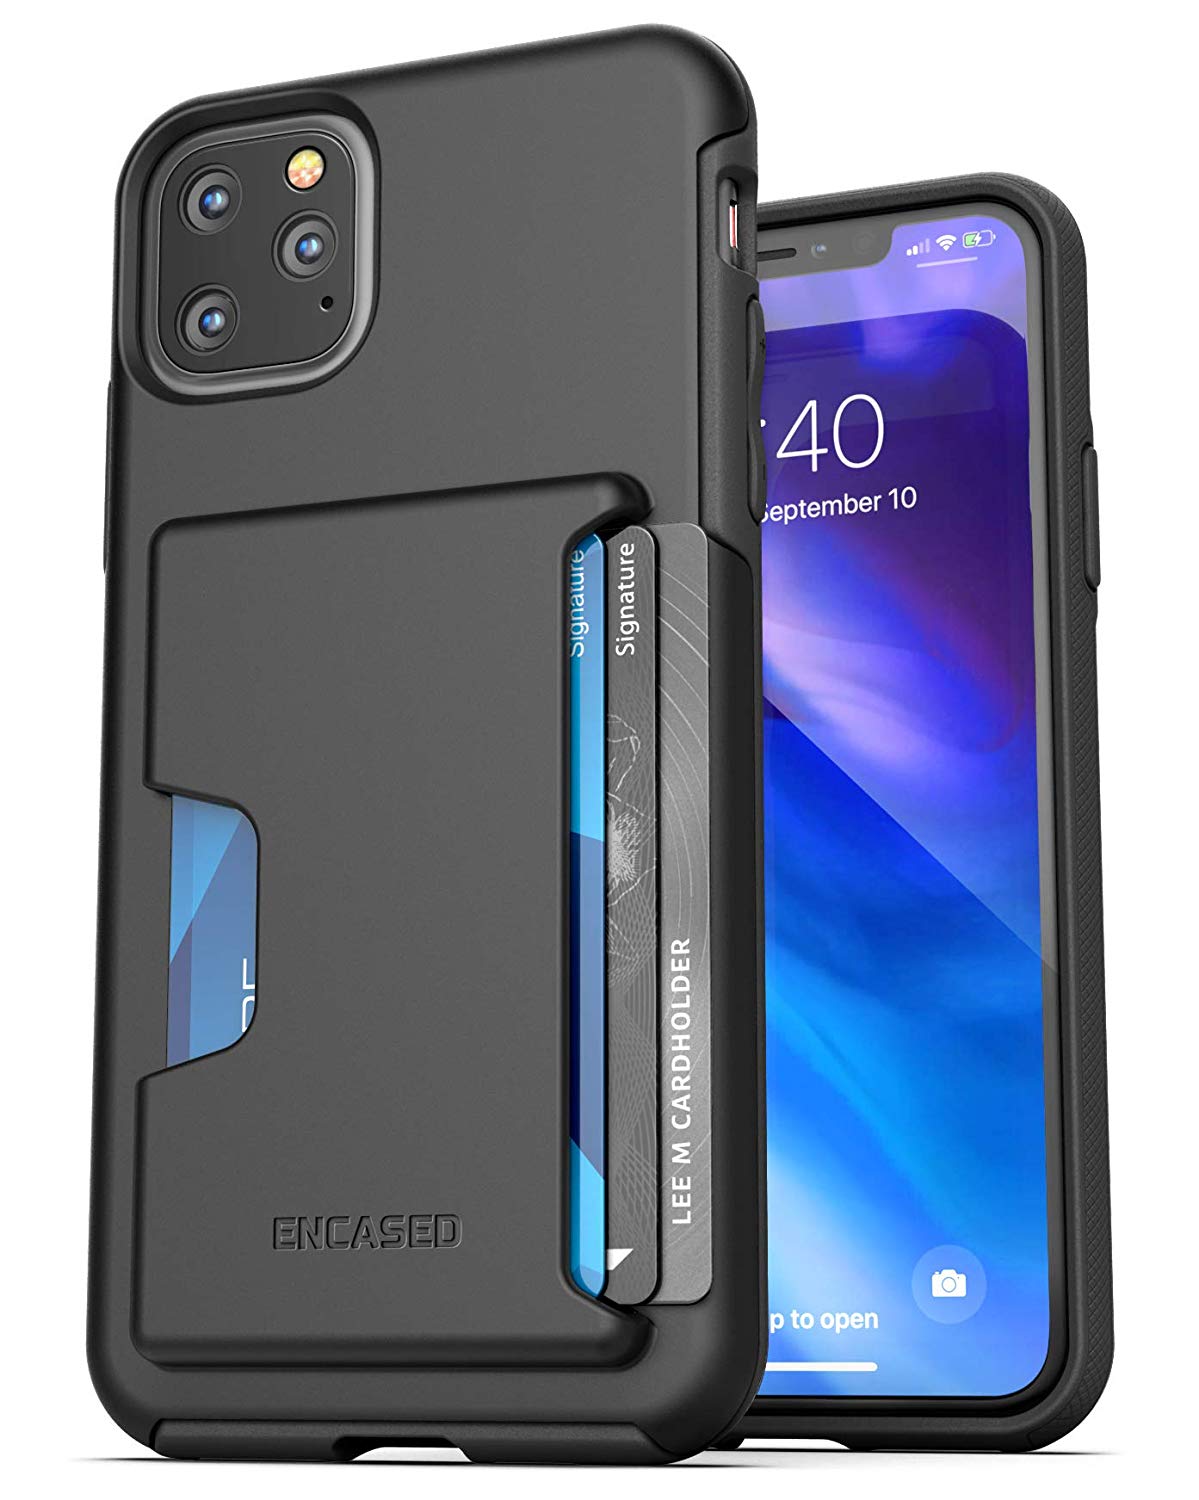 Encased-iPhone-11-card-case